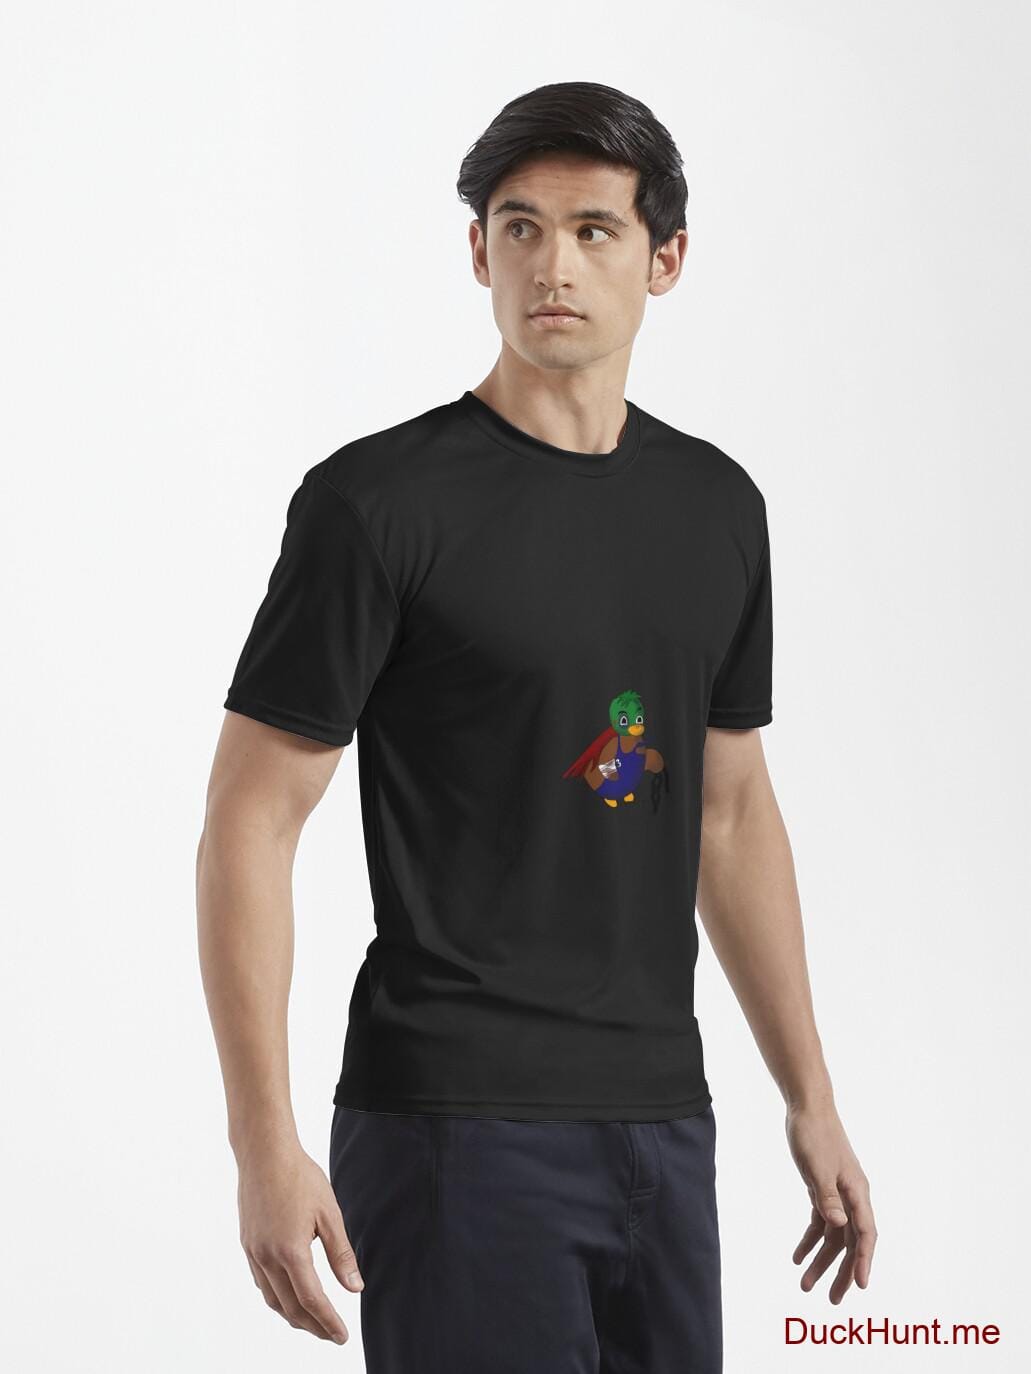 Dead DuckHunt Boss (smokeless) Black Active T-Shirt (Front printed) alternative image 6